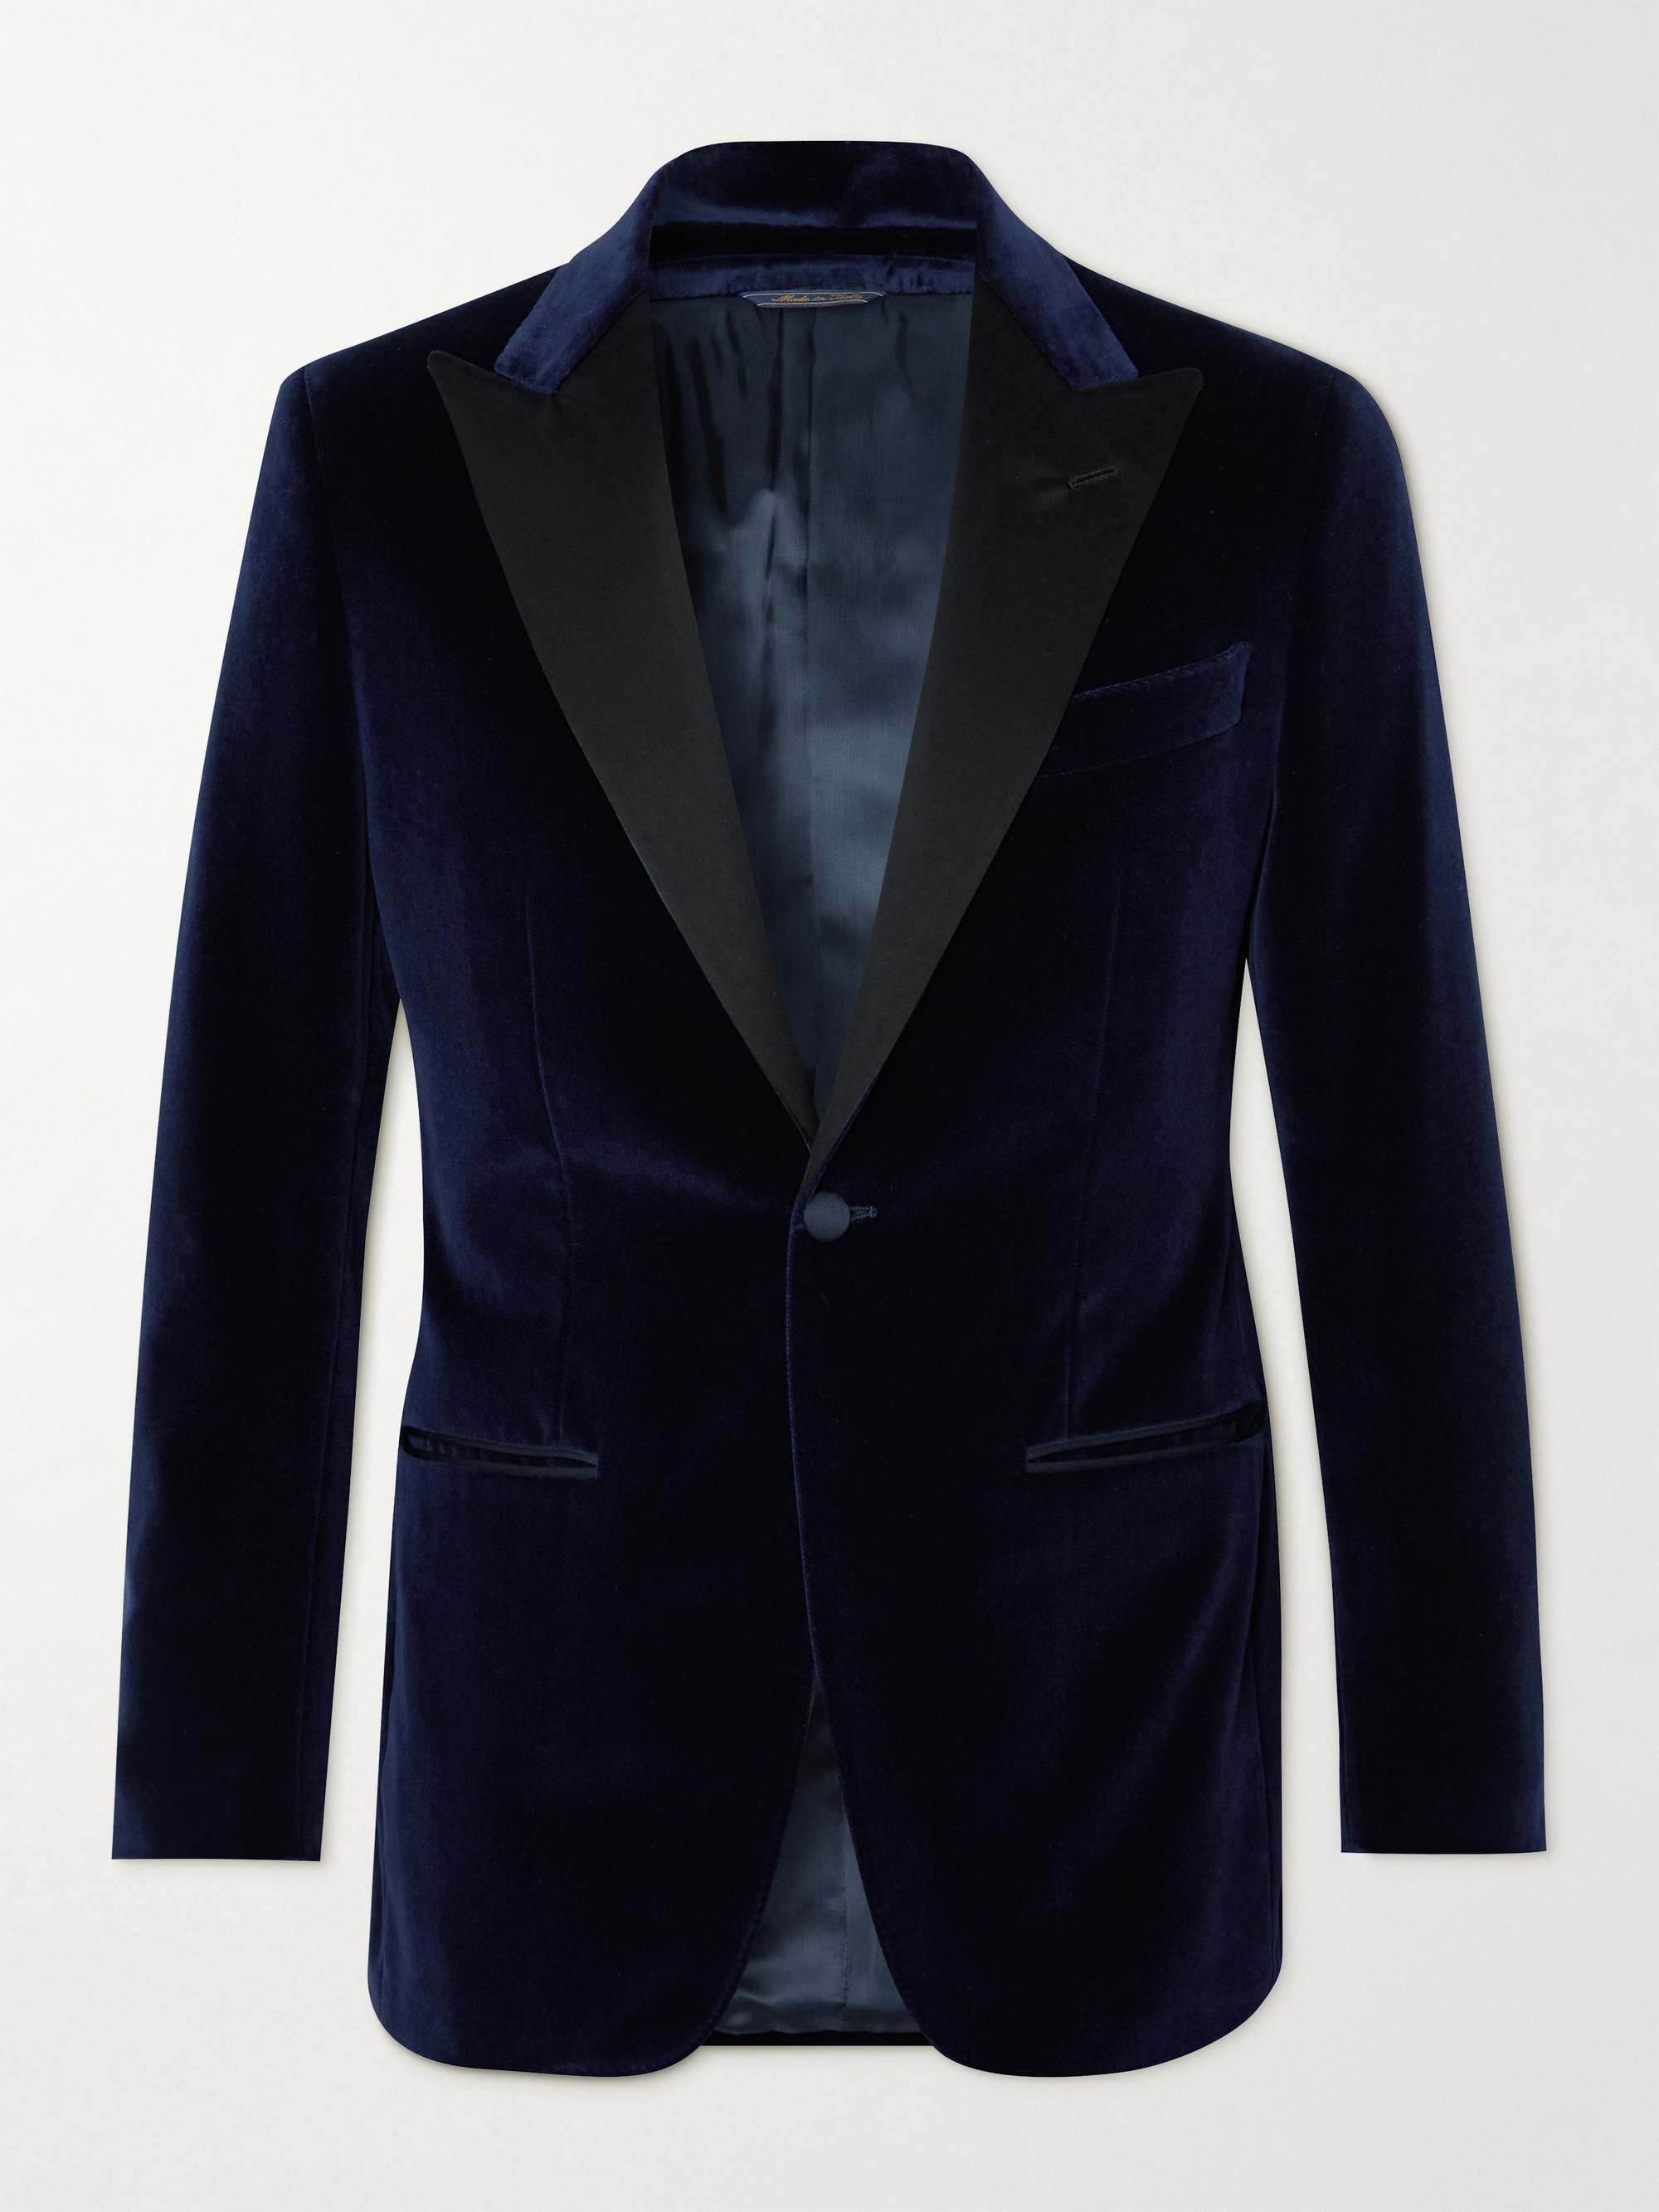 THOM SWEENEY Slim-Fit Faille-Trimmed Cotton and Modal-Blend Velvet Tuxedo Jacket